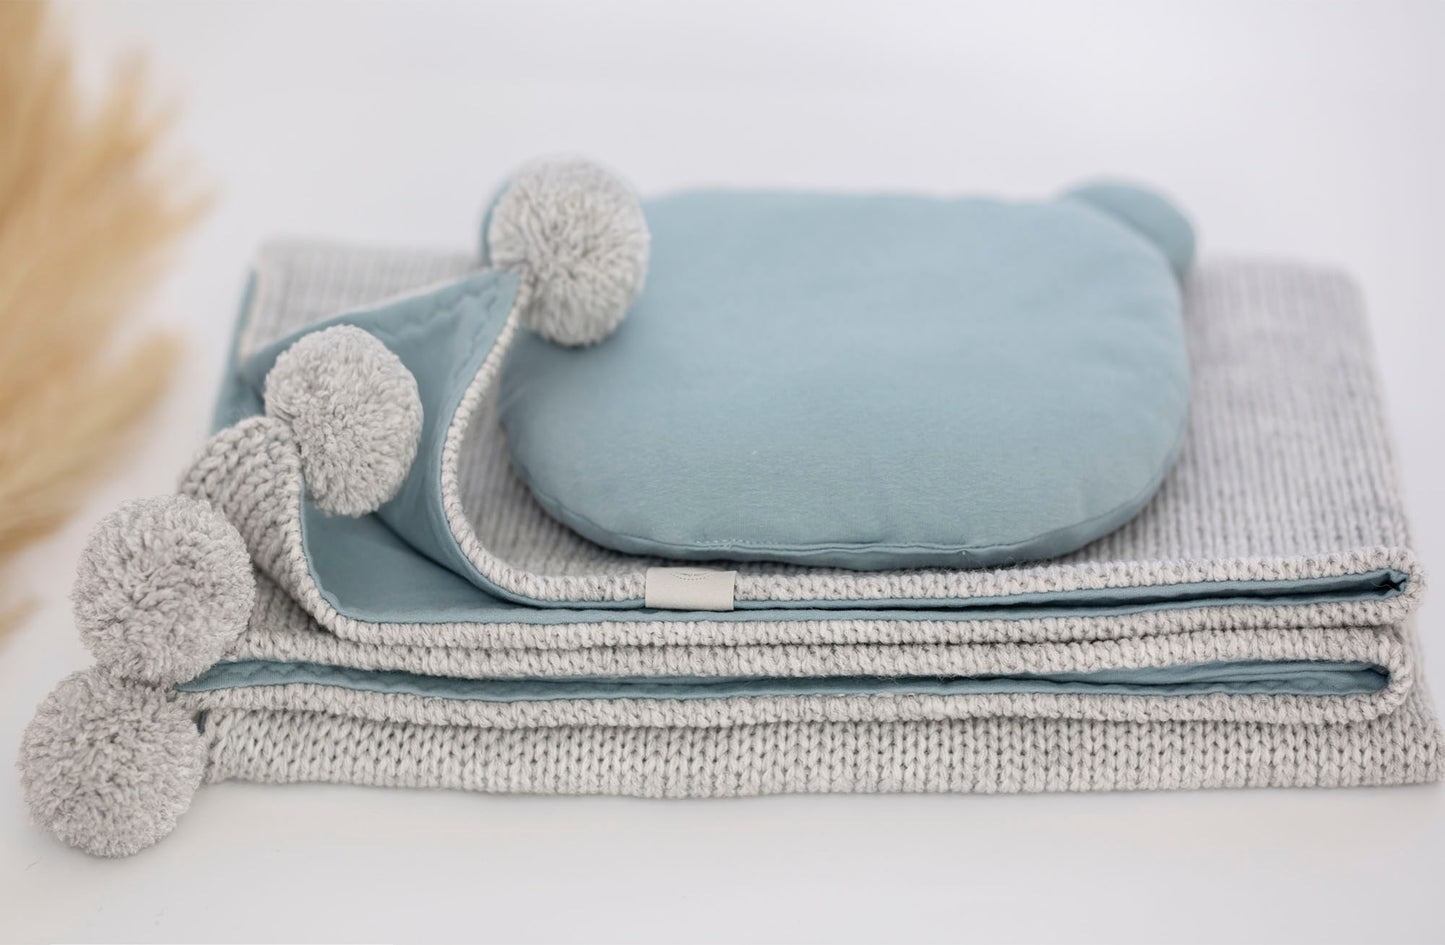 Double-sided wool blanket